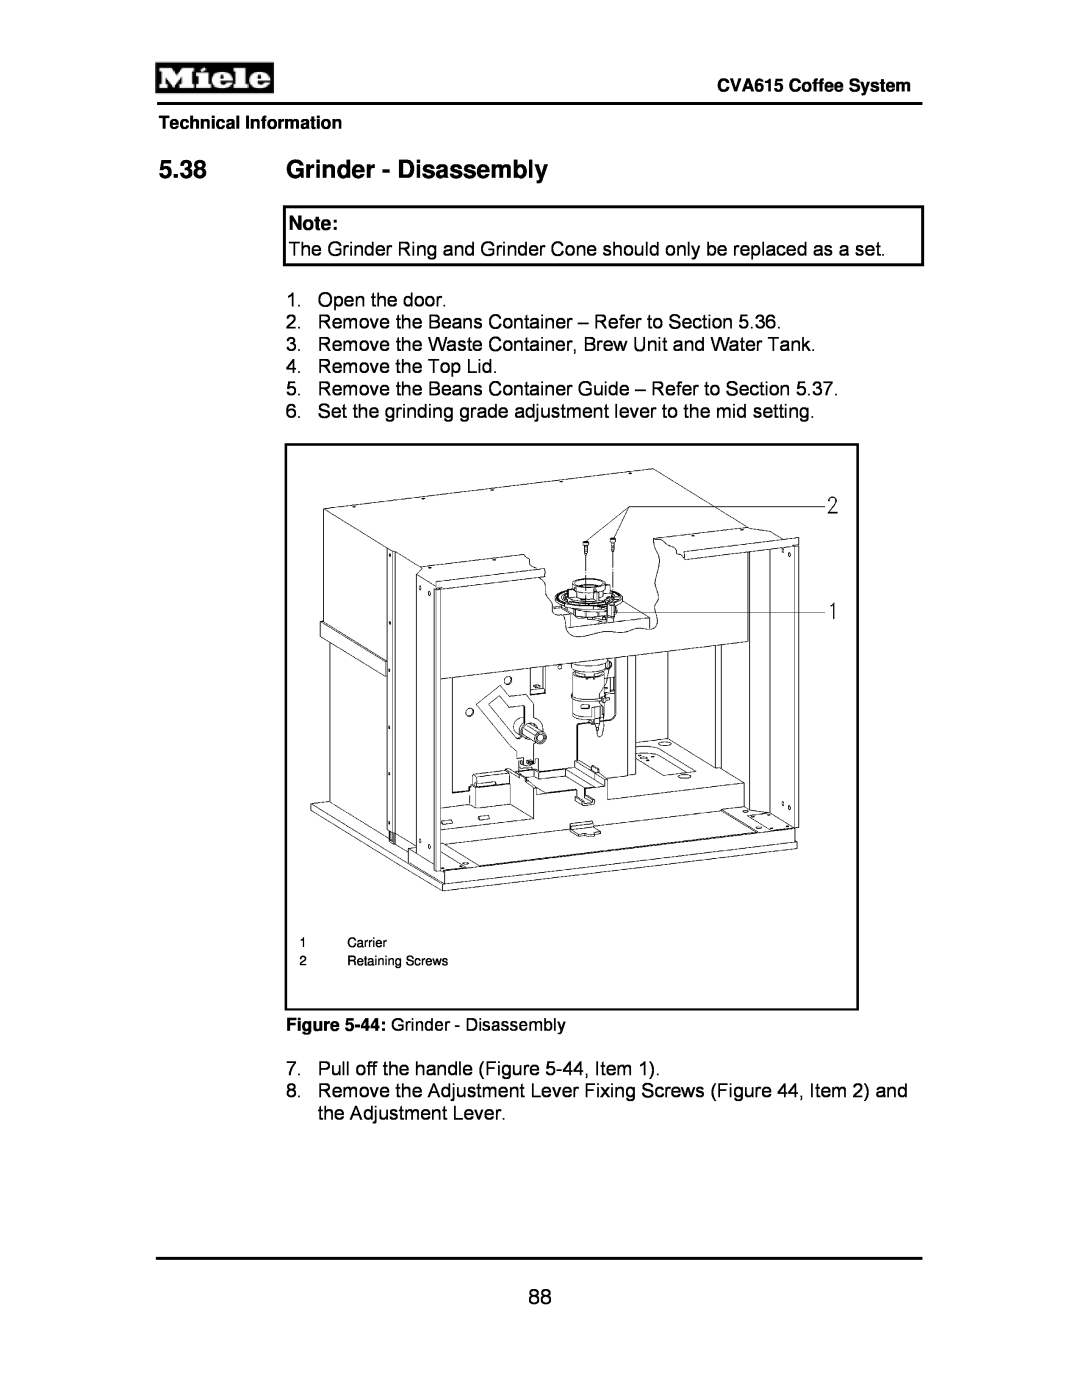 Miele CVA615 manual 5.38Grinder - Disassembly 